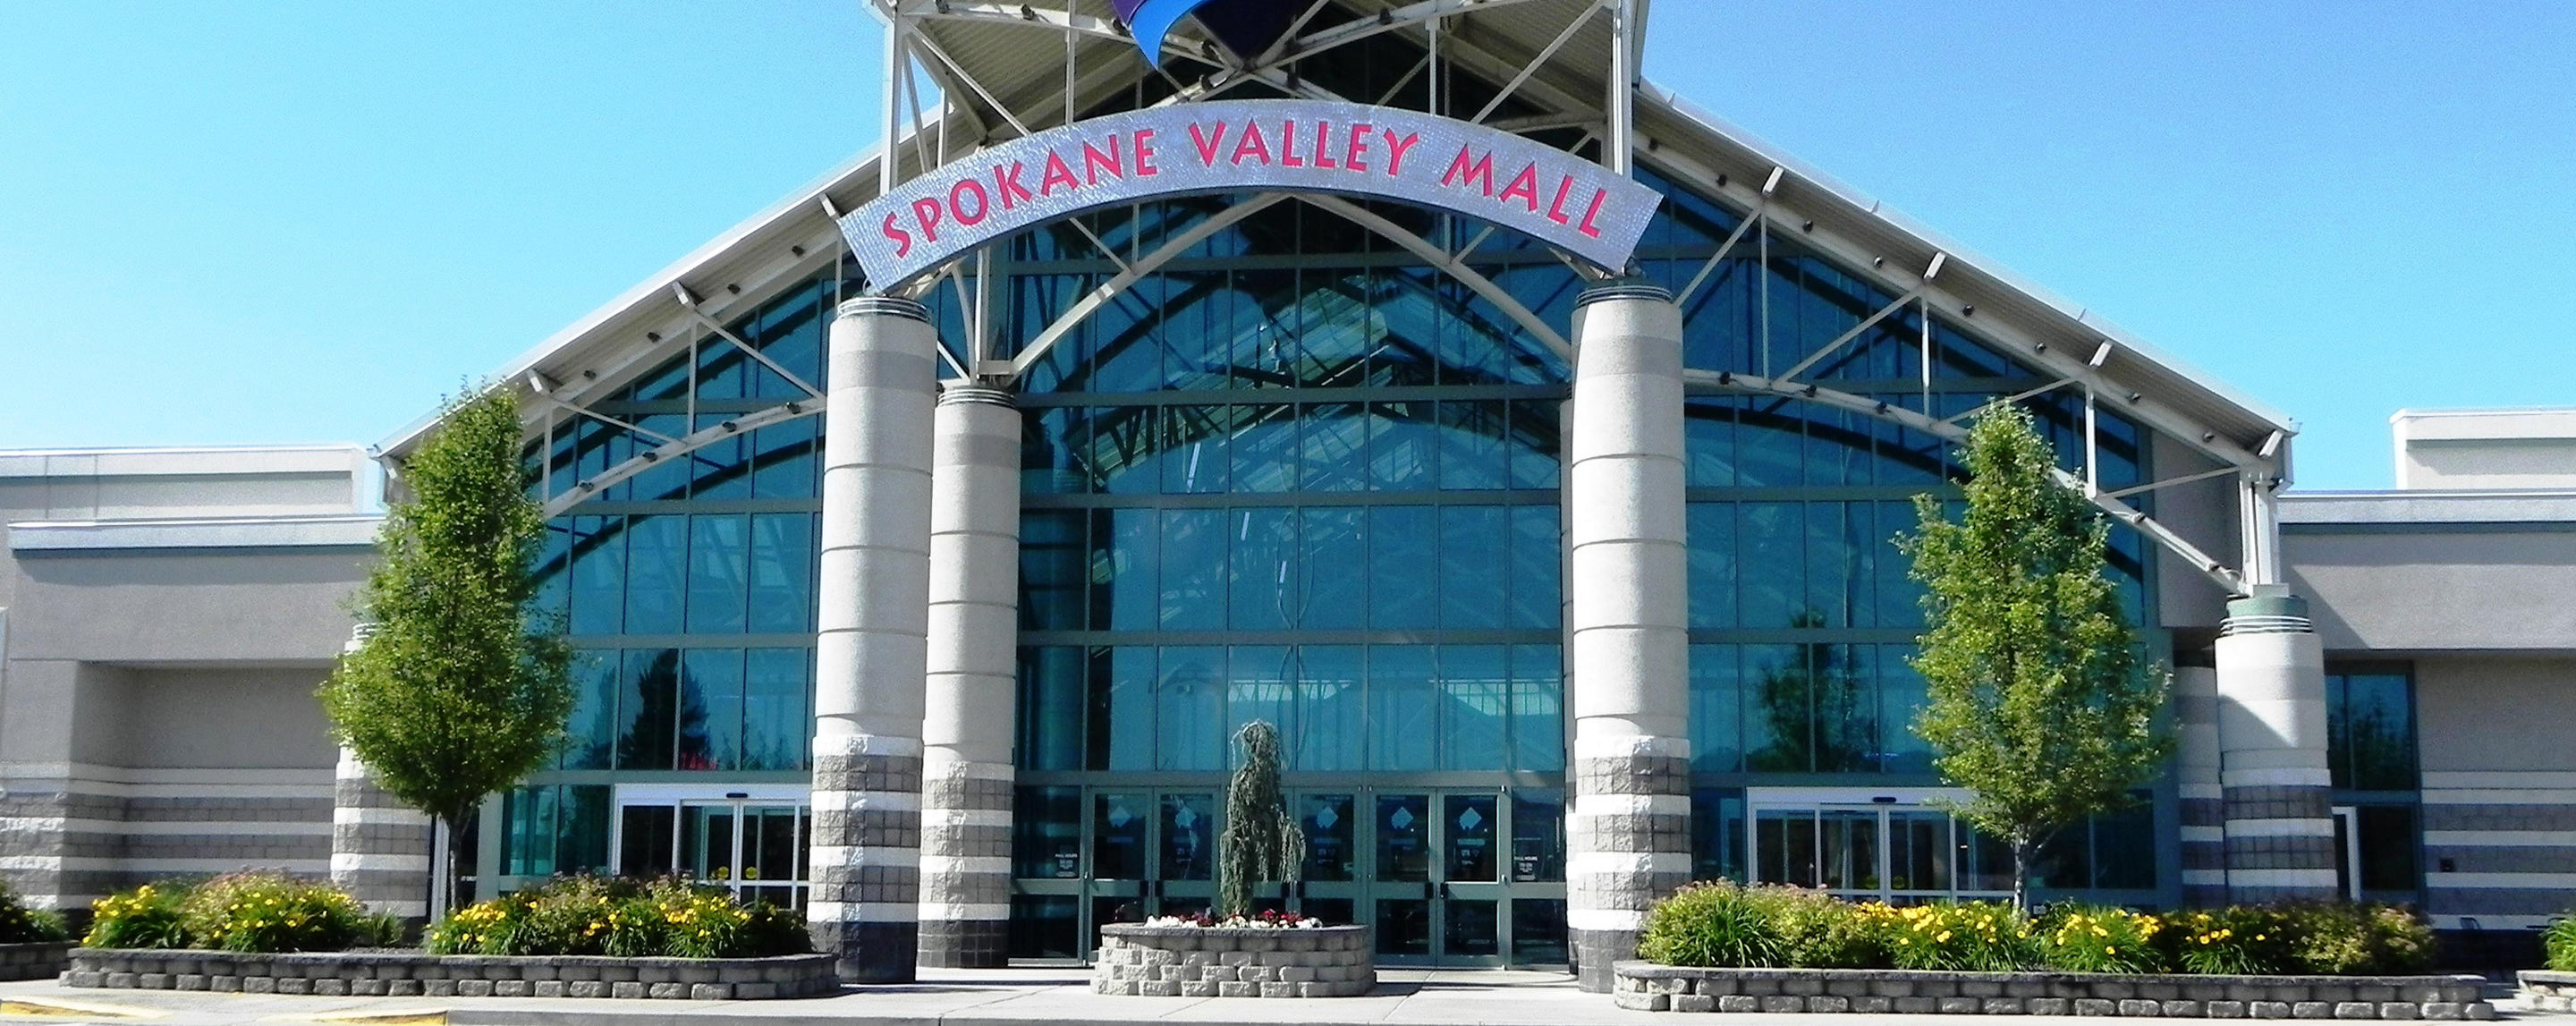 Spokane valley mall job openings